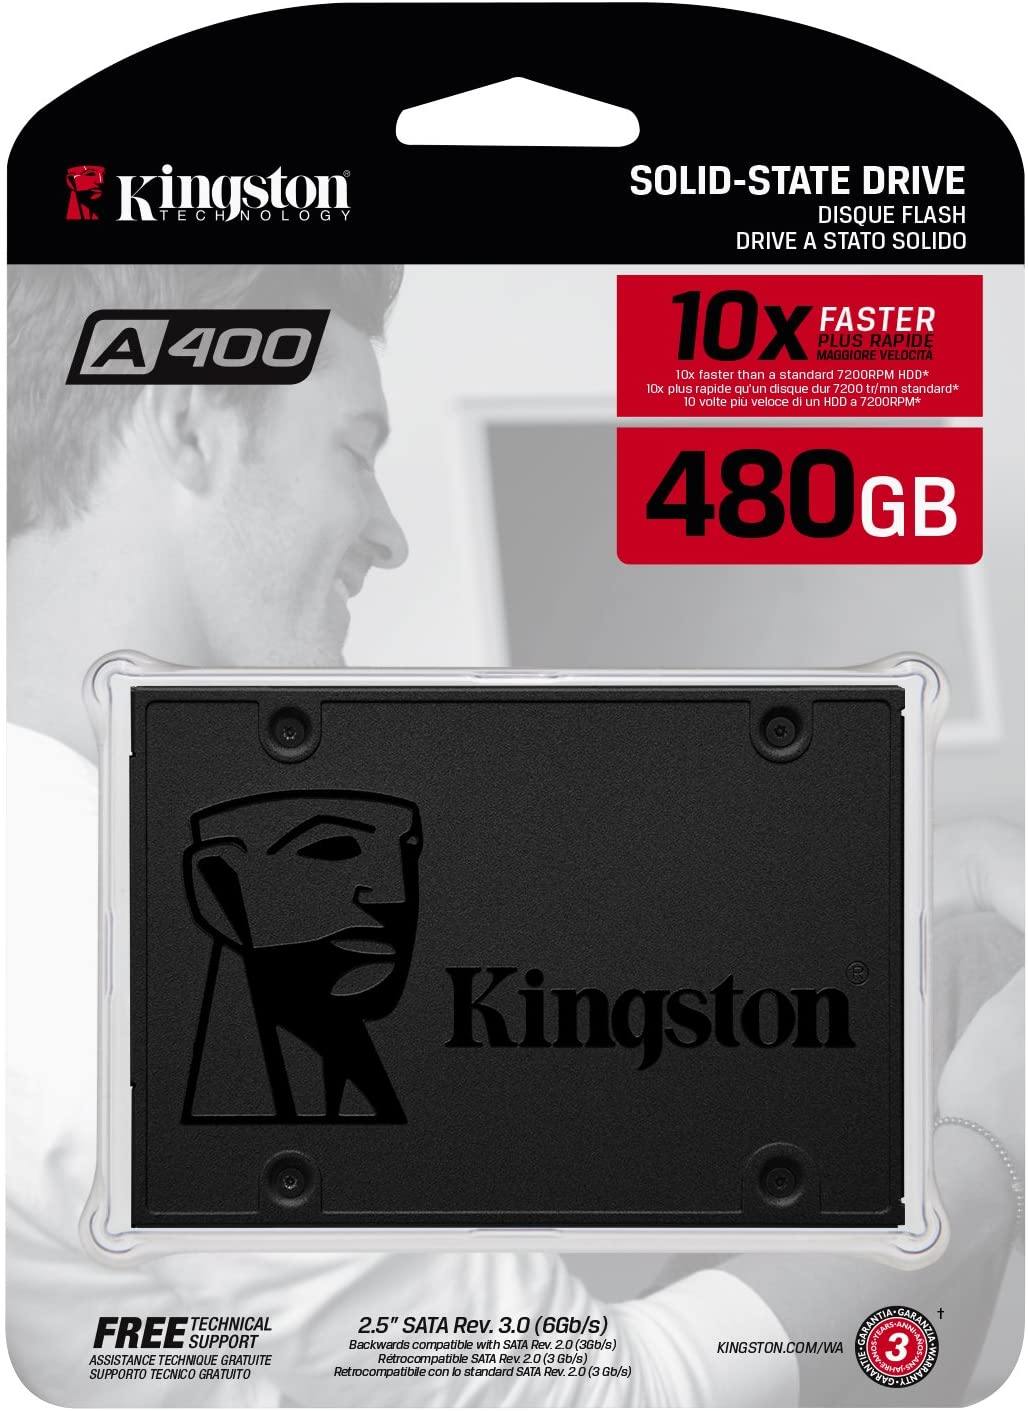 Kingston A400 480GB SSD 2.5